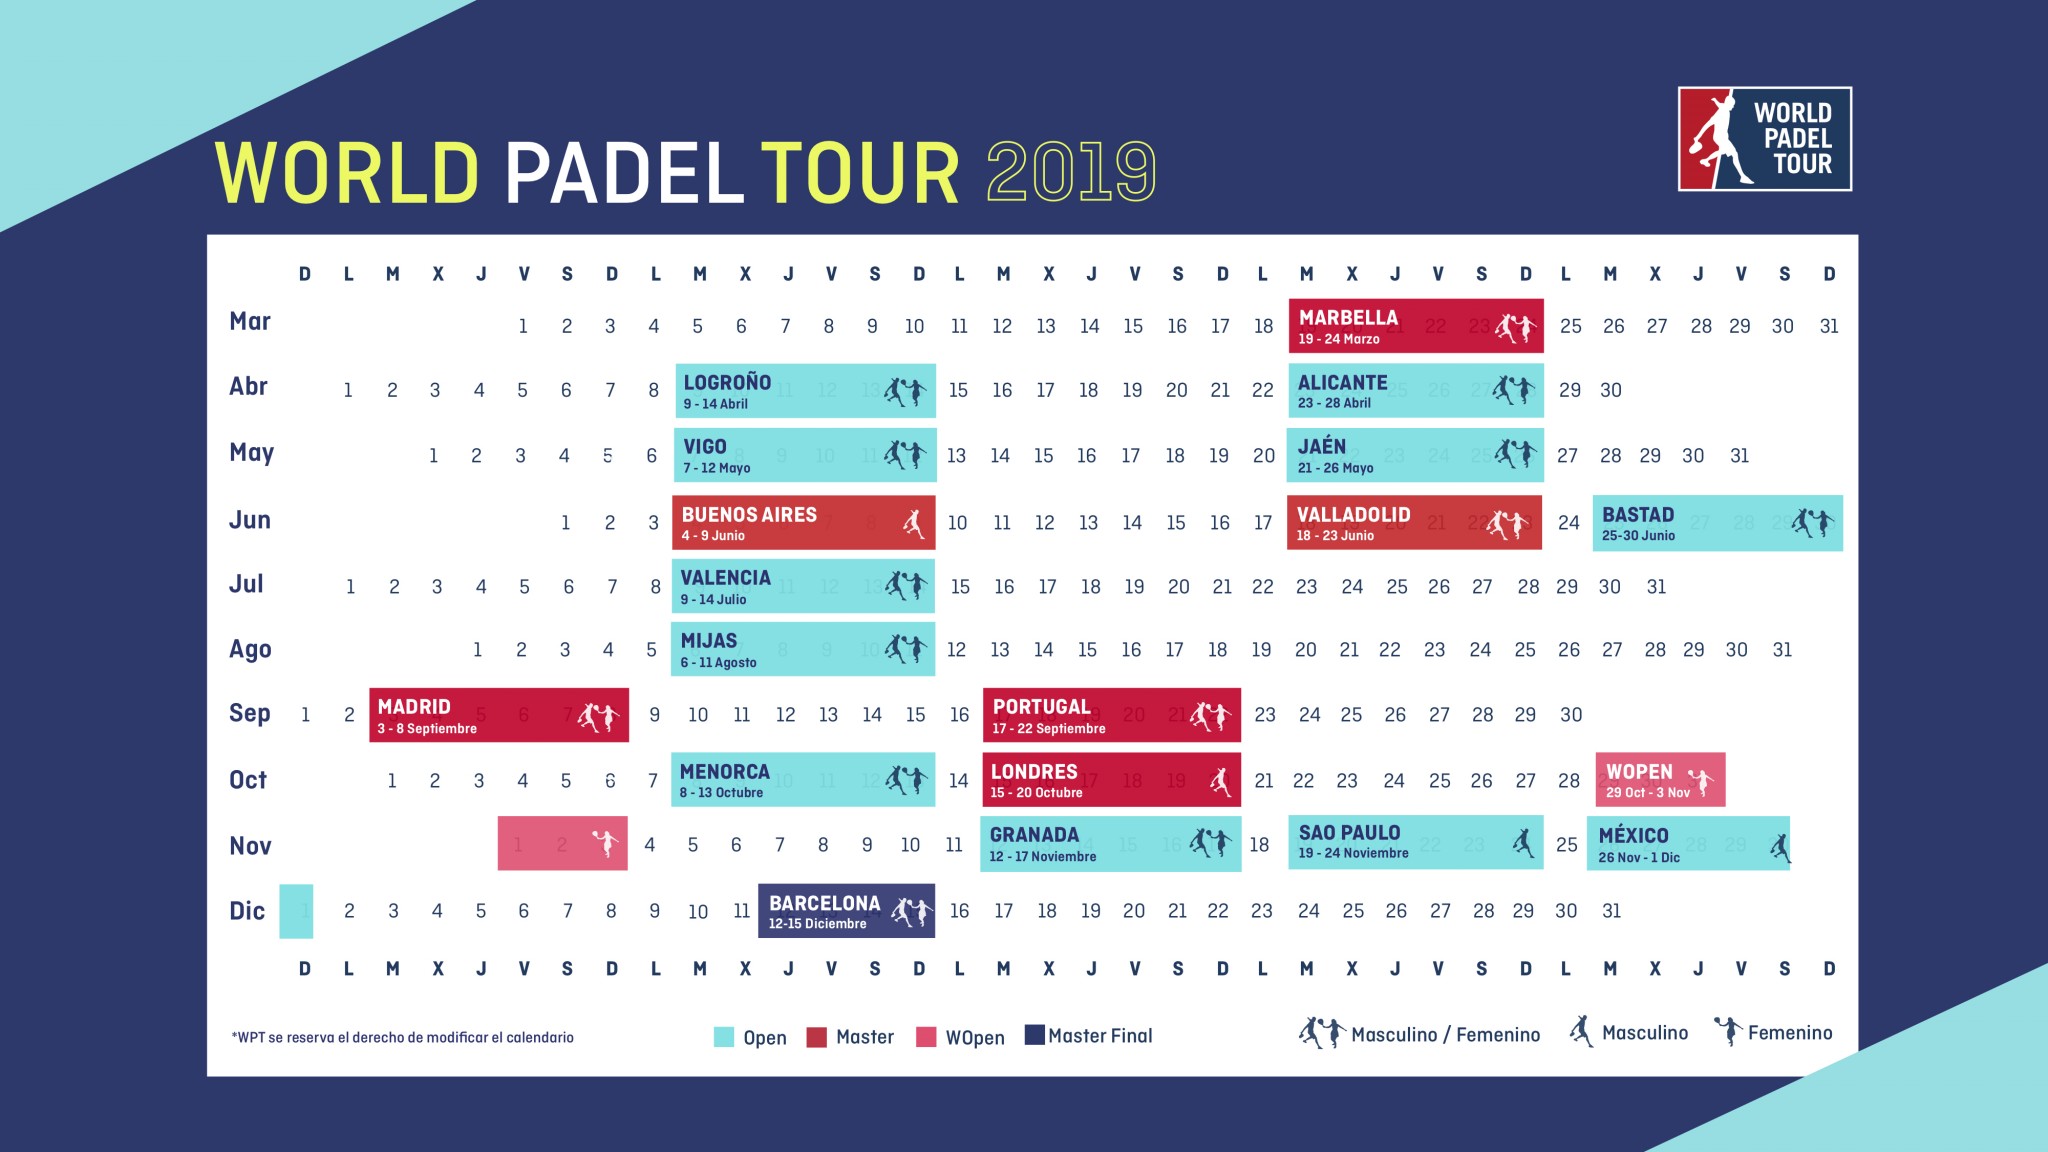 Calendar World Padel Tour 2019: Very international!